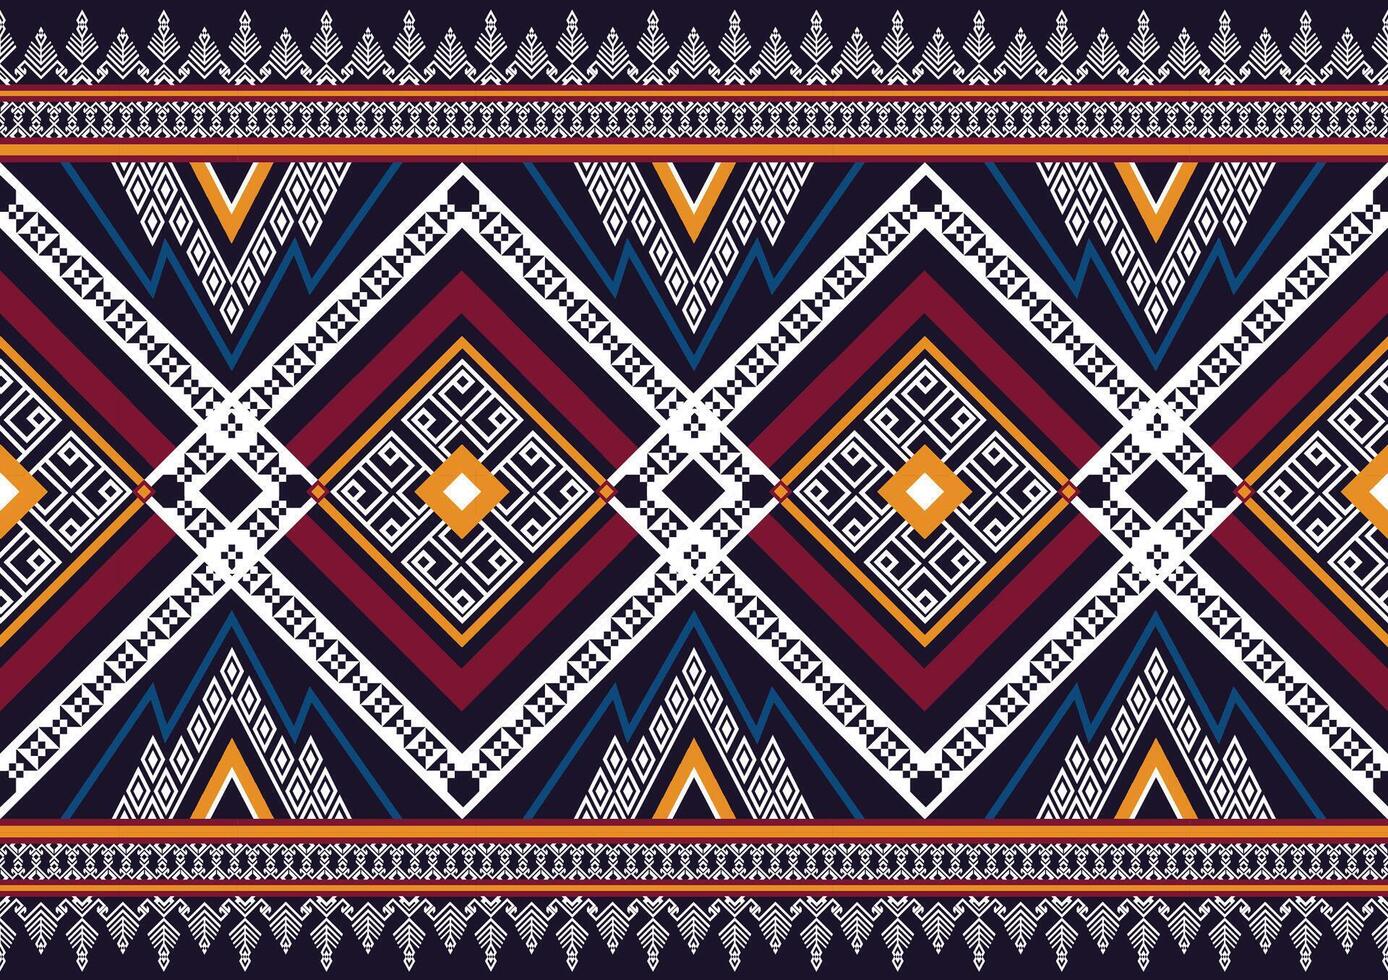 abstrakt orientalisk etnisk geometrisk, sömlös mönster, grafisk design geometrisk skriva ut mönster, design för gåva omslag papper, matta, tapet, Kläder, slå in, tyg, omslag, textil, etc. vektor